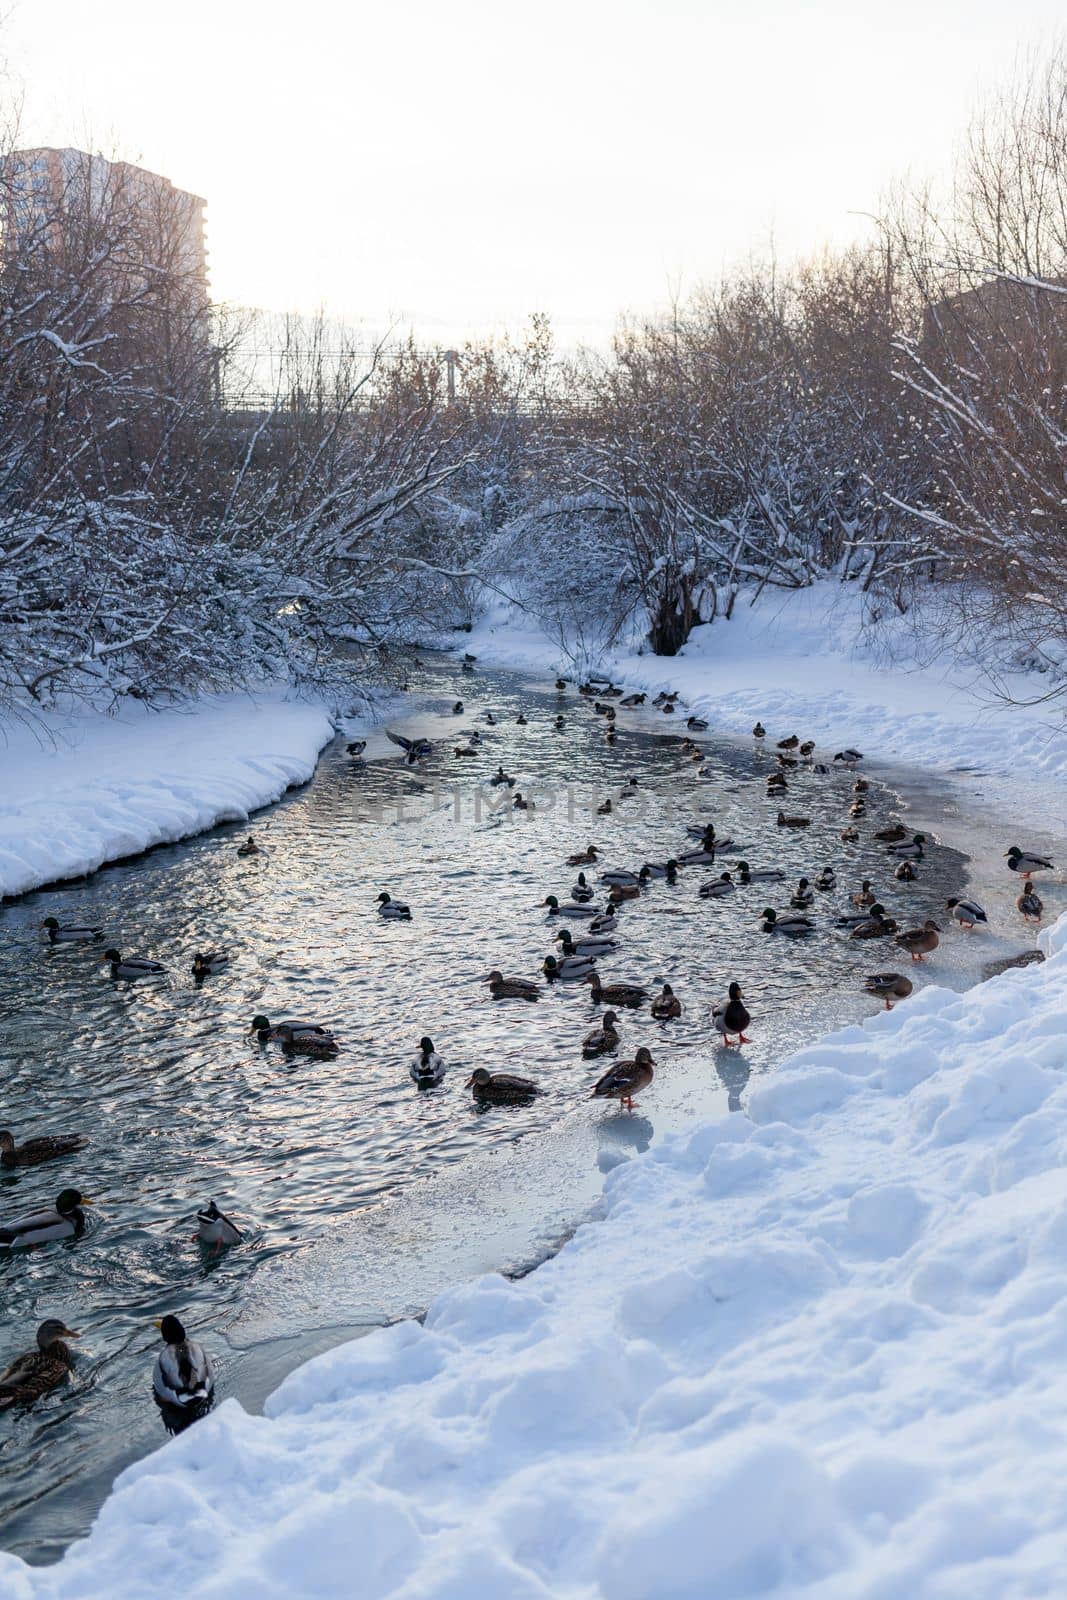 Ducks swim in the river in the city's public park in winter. by AnatoliiFoto